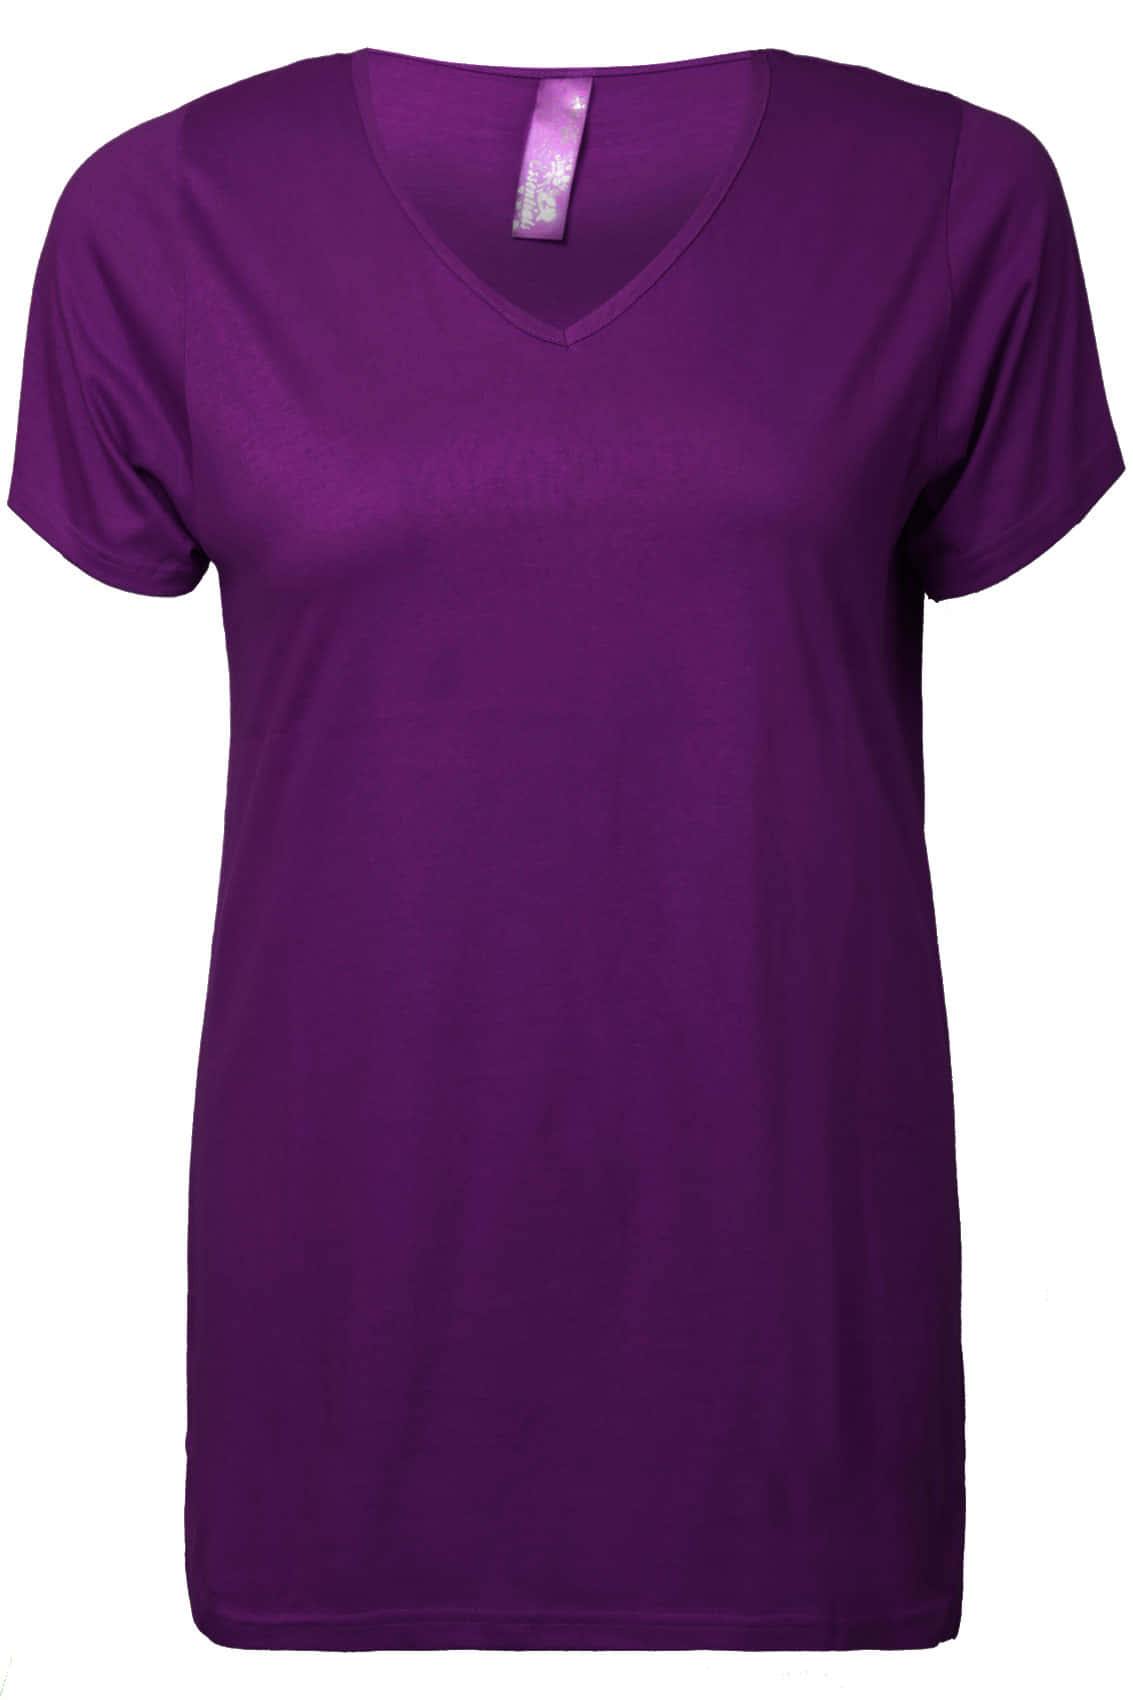 Destácatecon Una Camiseta Vibrante De Color Púrpura En Tu Pantalla De Computadora O Móvil. Fondo de pantalla